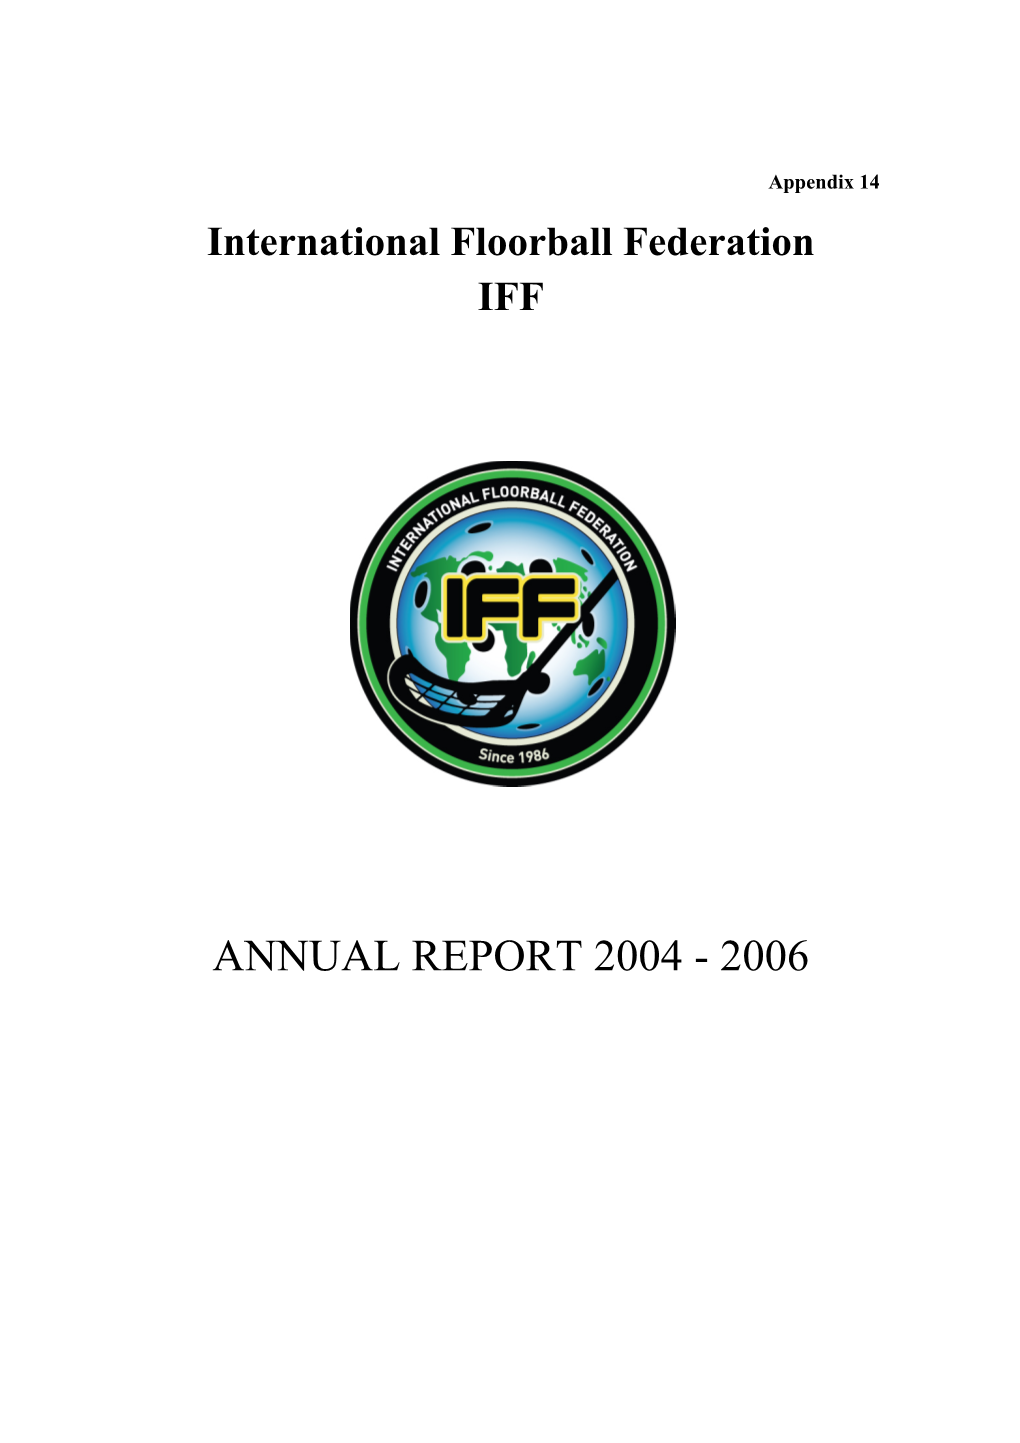 Annual Report 2004 - 2006